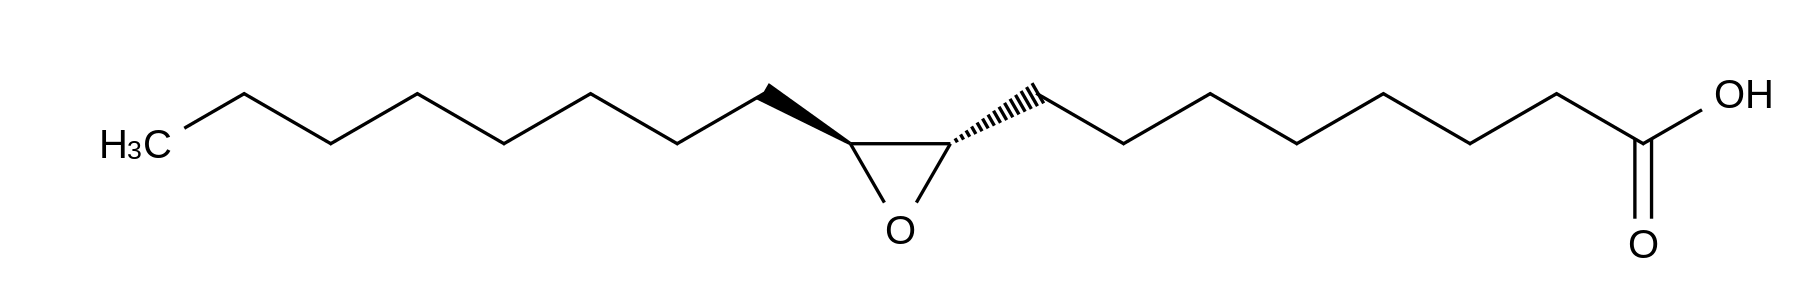 rac trans-9,10-Epoxystearic Acid